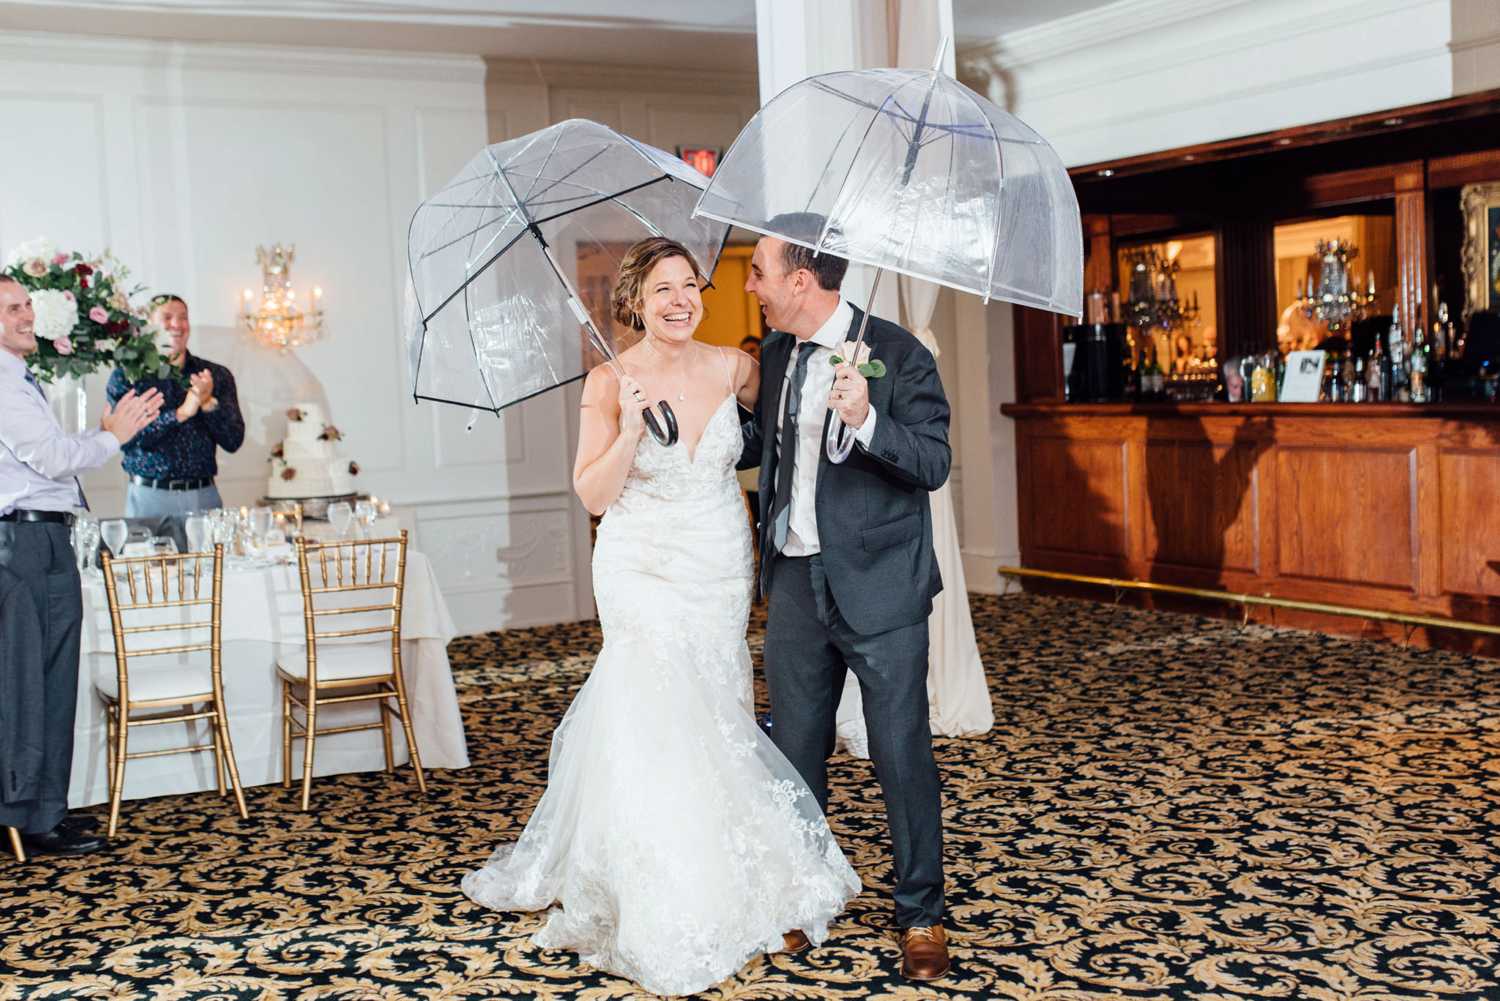 Jon + Julie - William Penn Inn Wedding - Montgomery County Wedding Photographer - Alison Dunn Photography photo